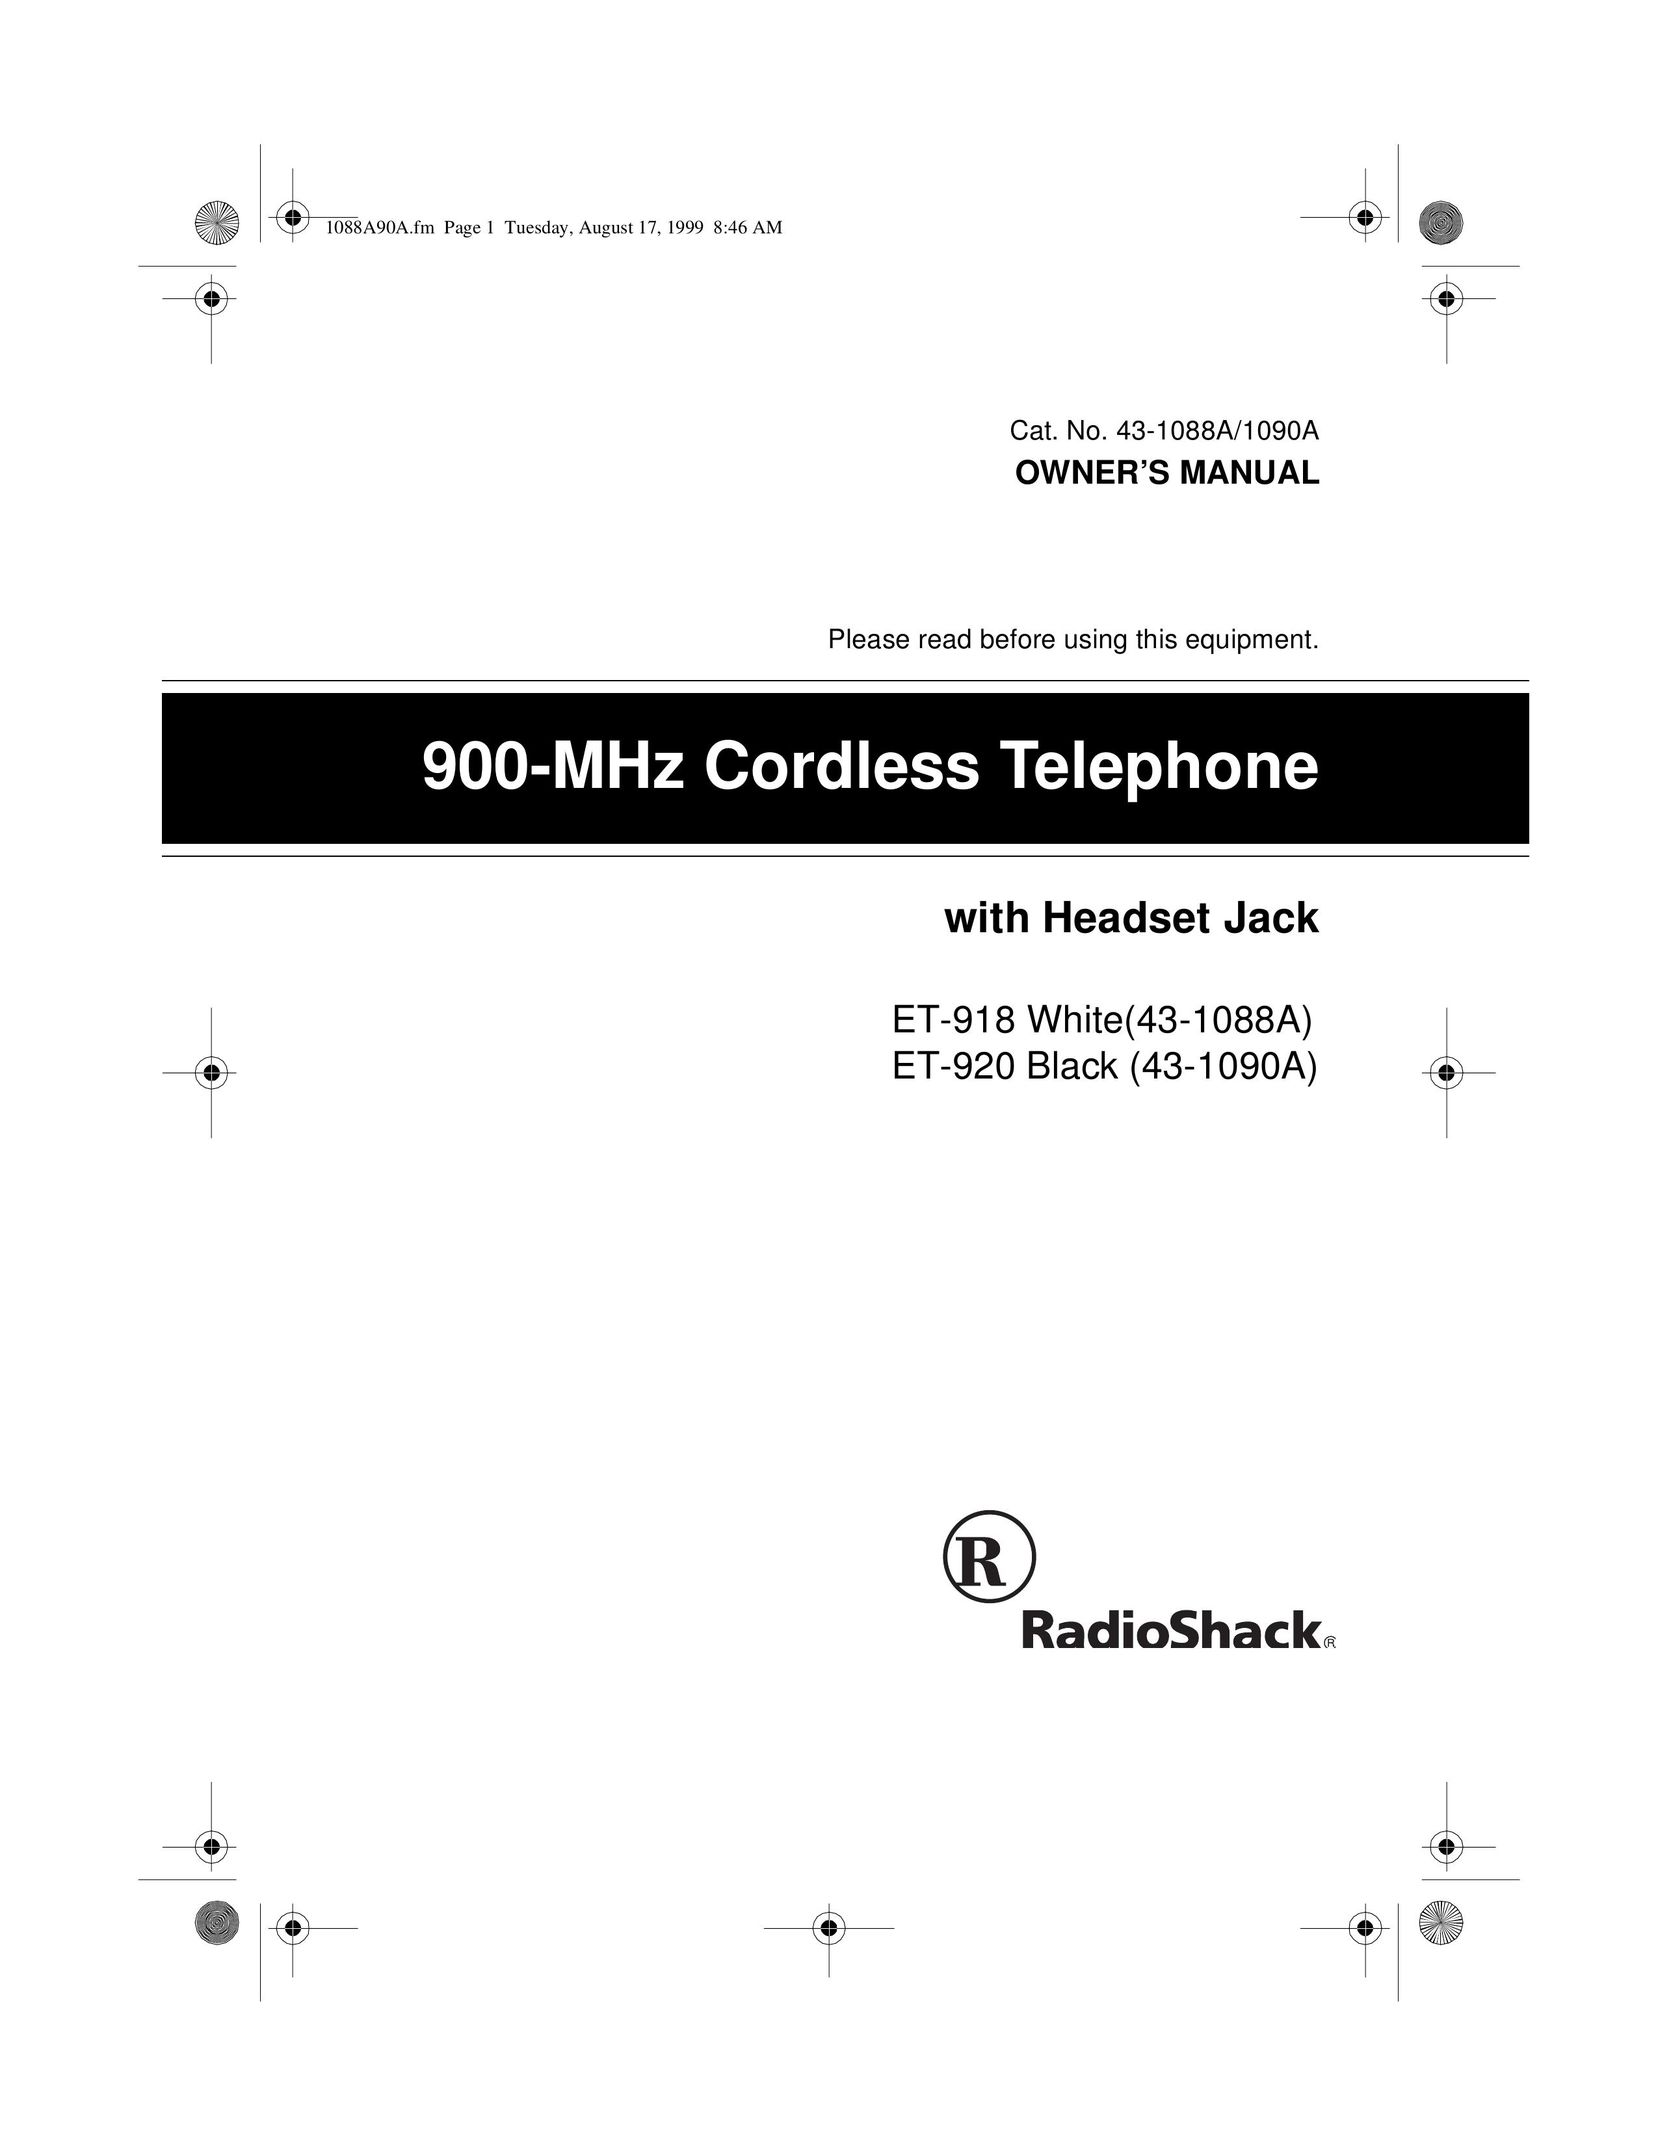 Radio Shack 43-1090A Cordless Telephone User Manual